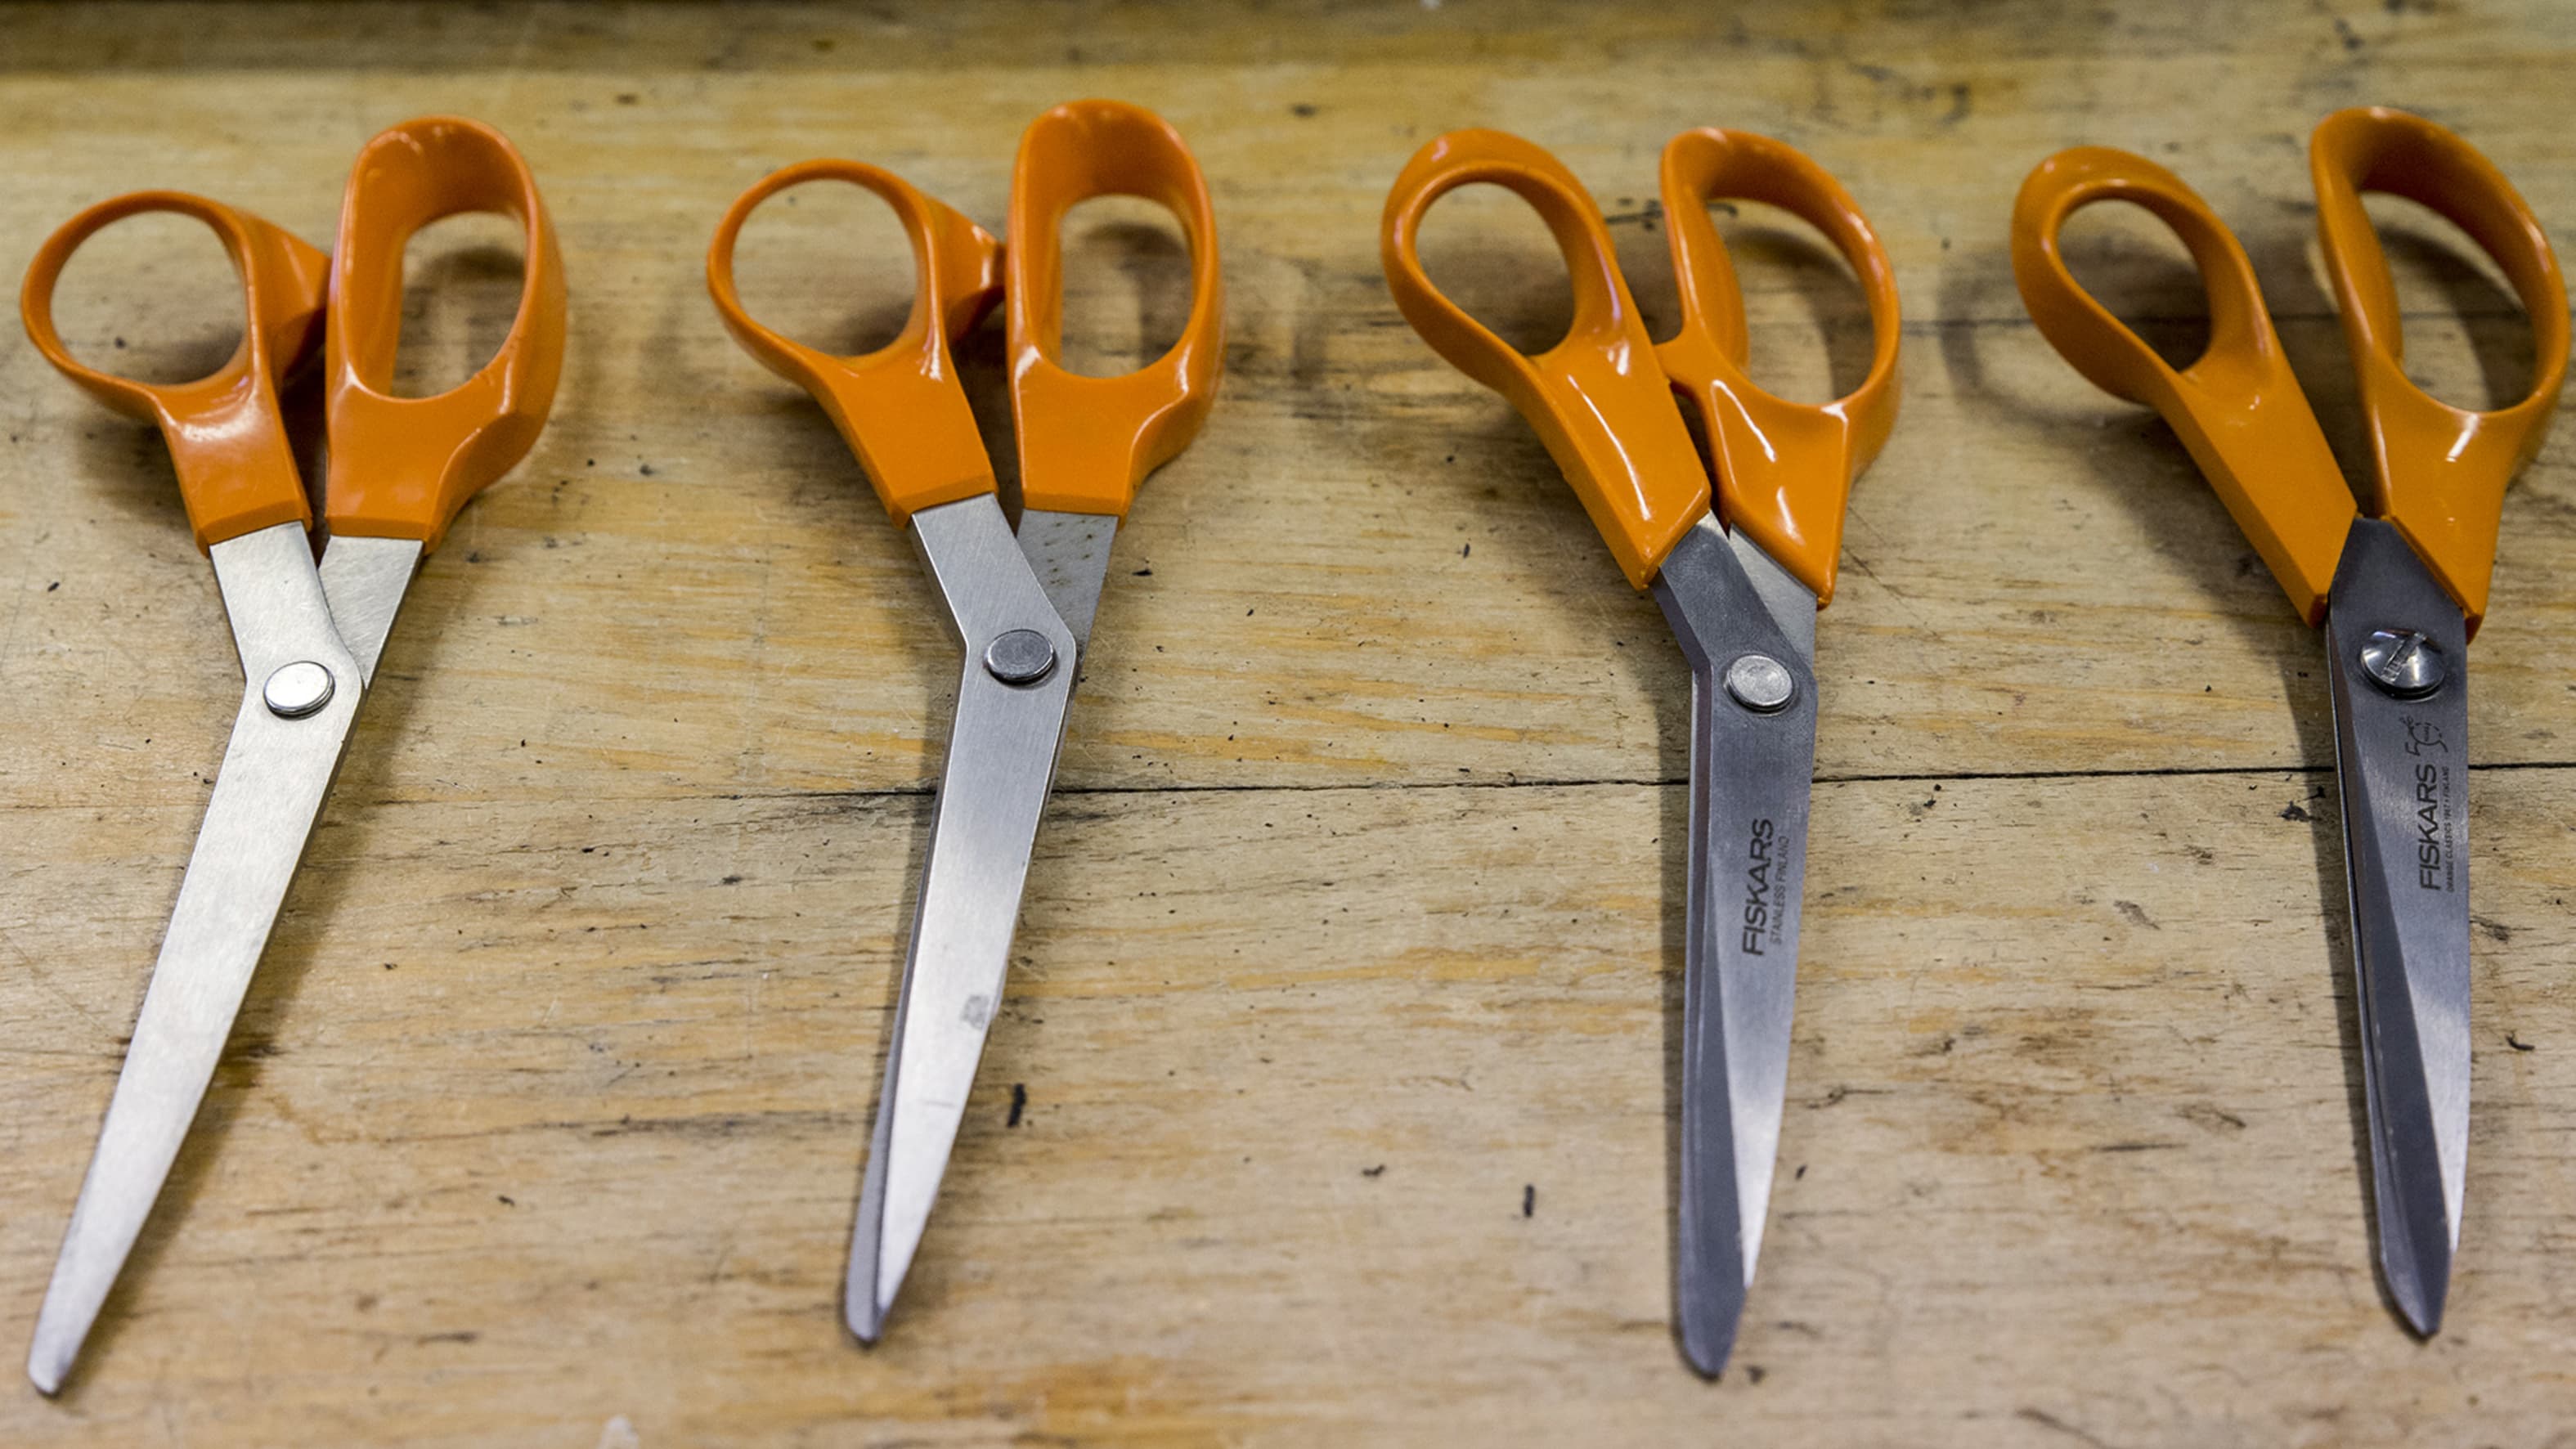 Fiskars scissors, the iconic household scissors that sold by the billion